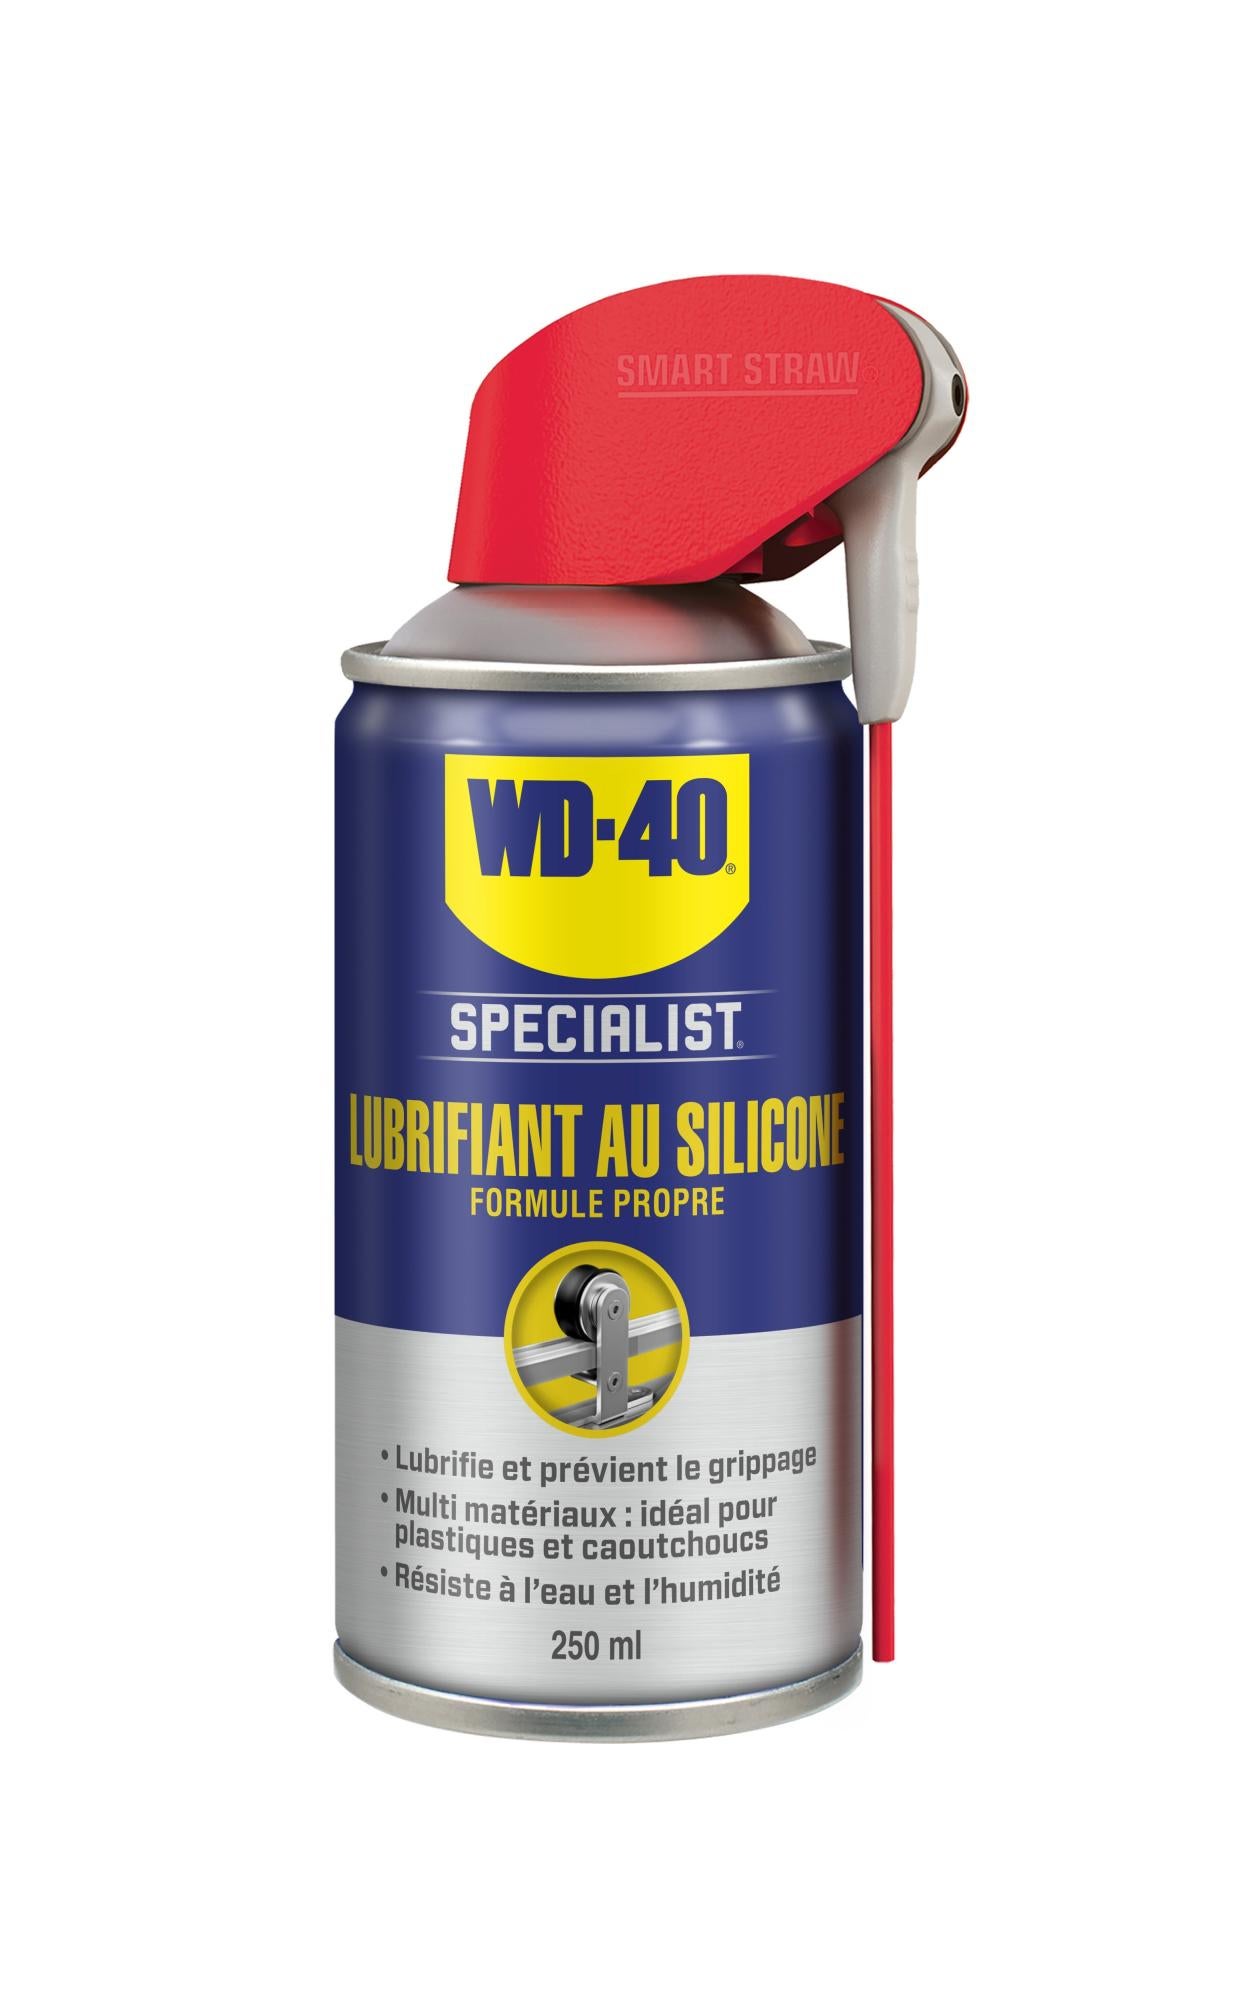 COMED - Bombe aérosol lubrifiant silikon spray ( La pièce ) à 11,60 €